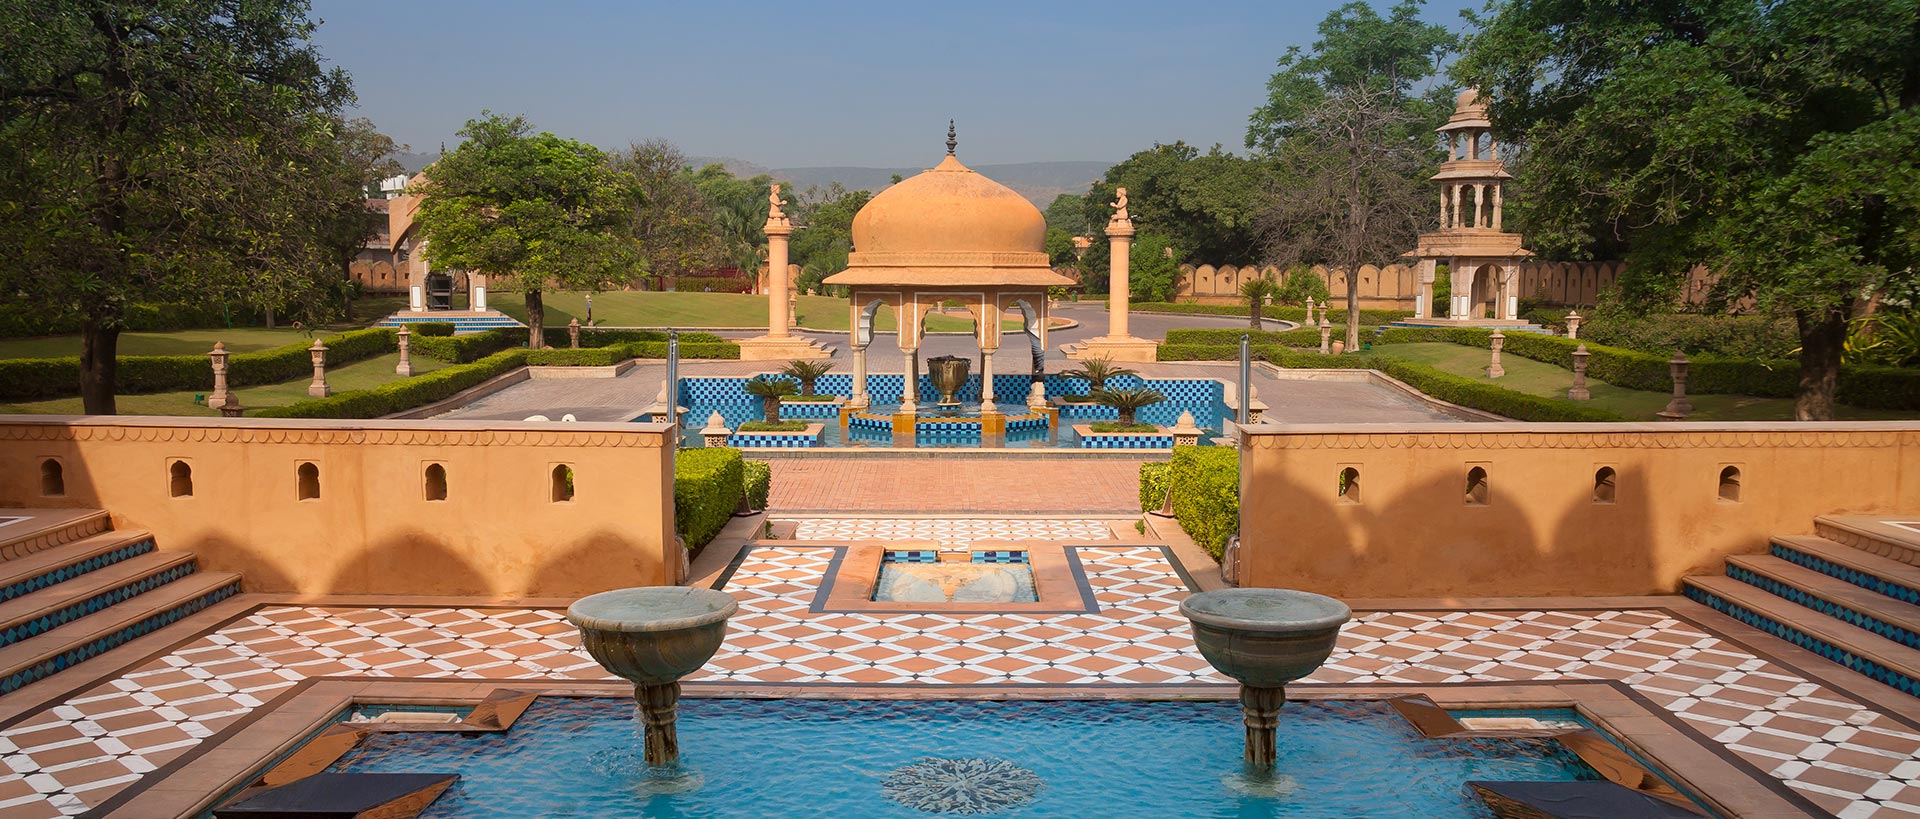 5 Star Resort In Jaipur | Luxury Hotel In Jaipur | The Oberoi Rajvilas, Jaipur